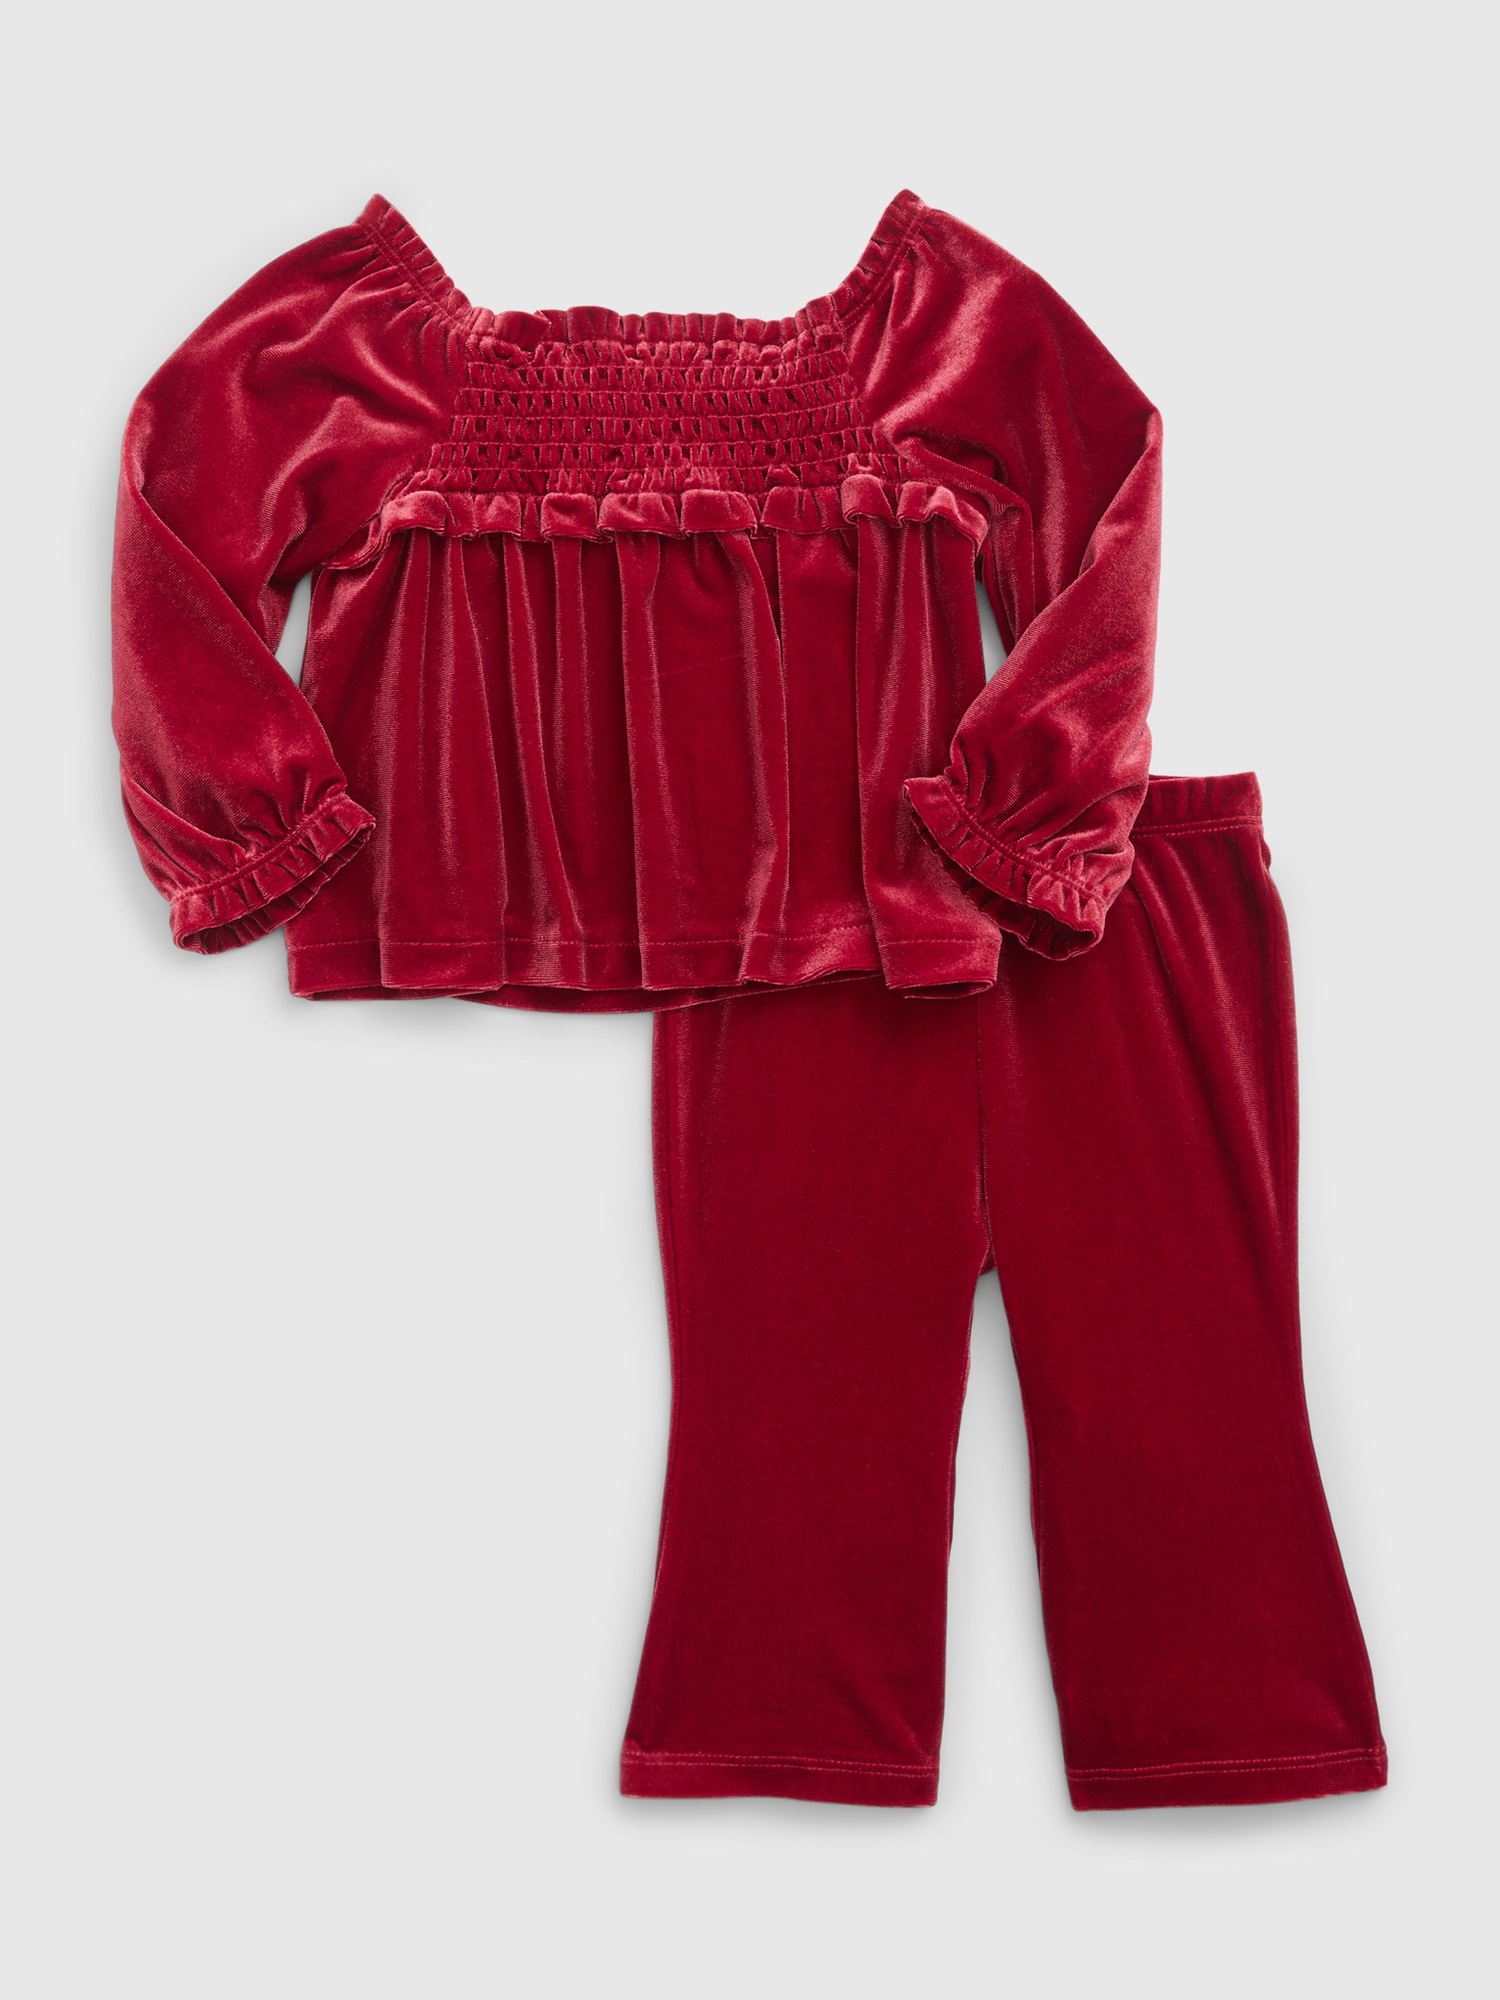 Gap Baby Velvet Smocked Outfit Set